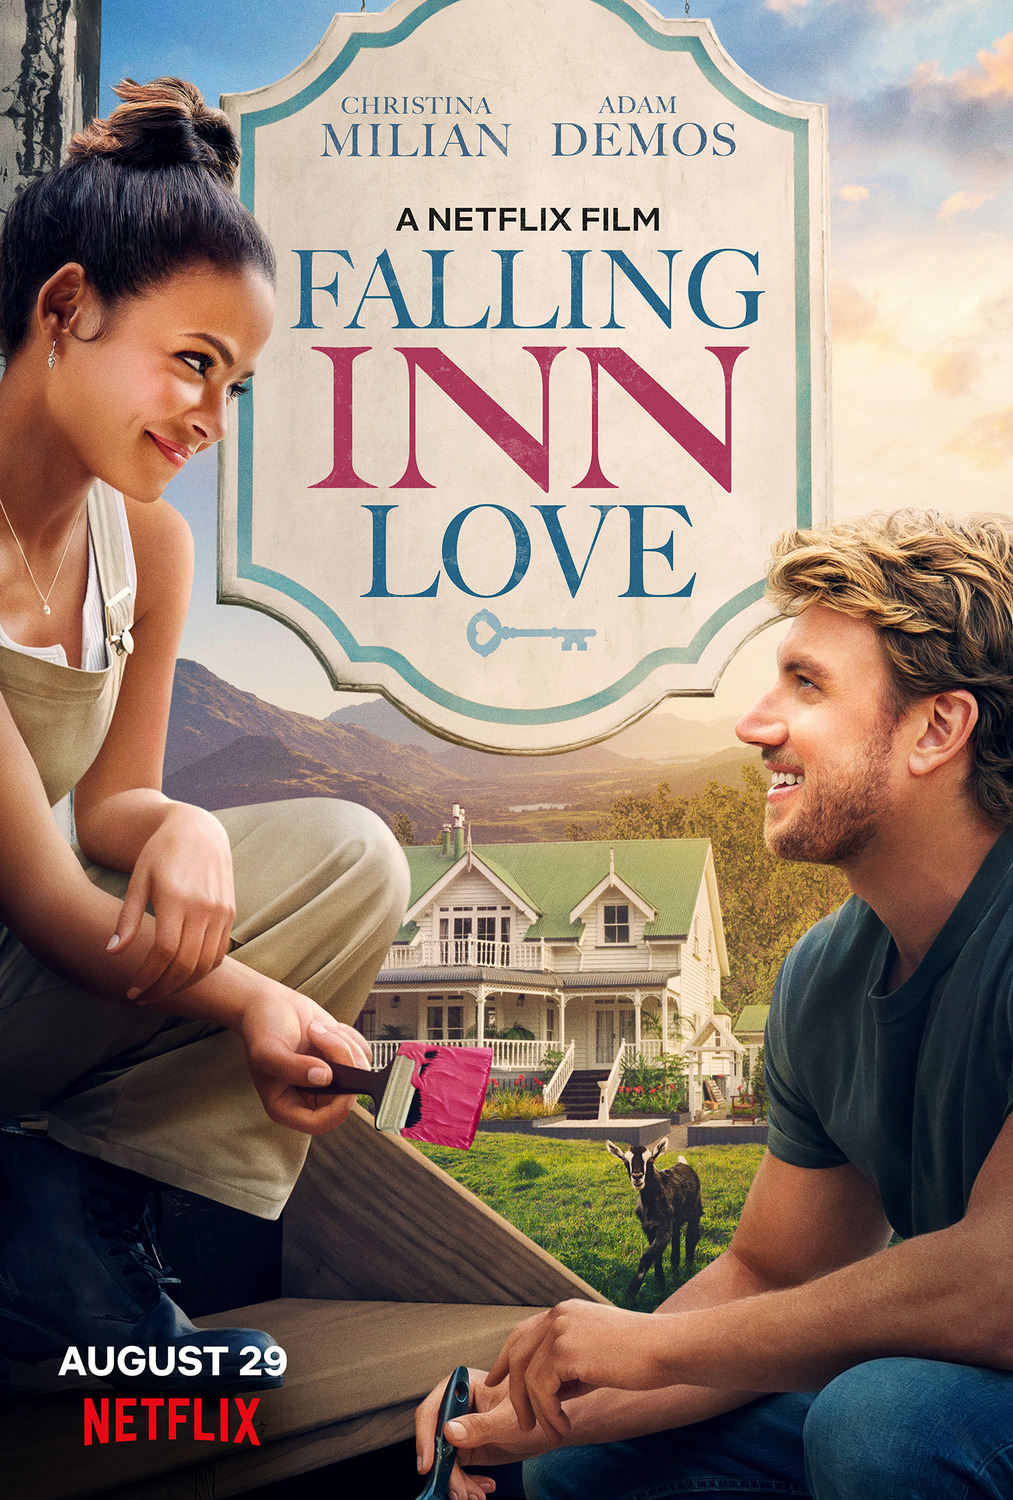 Extra Large TV Poster Image for Falling Inn Love 